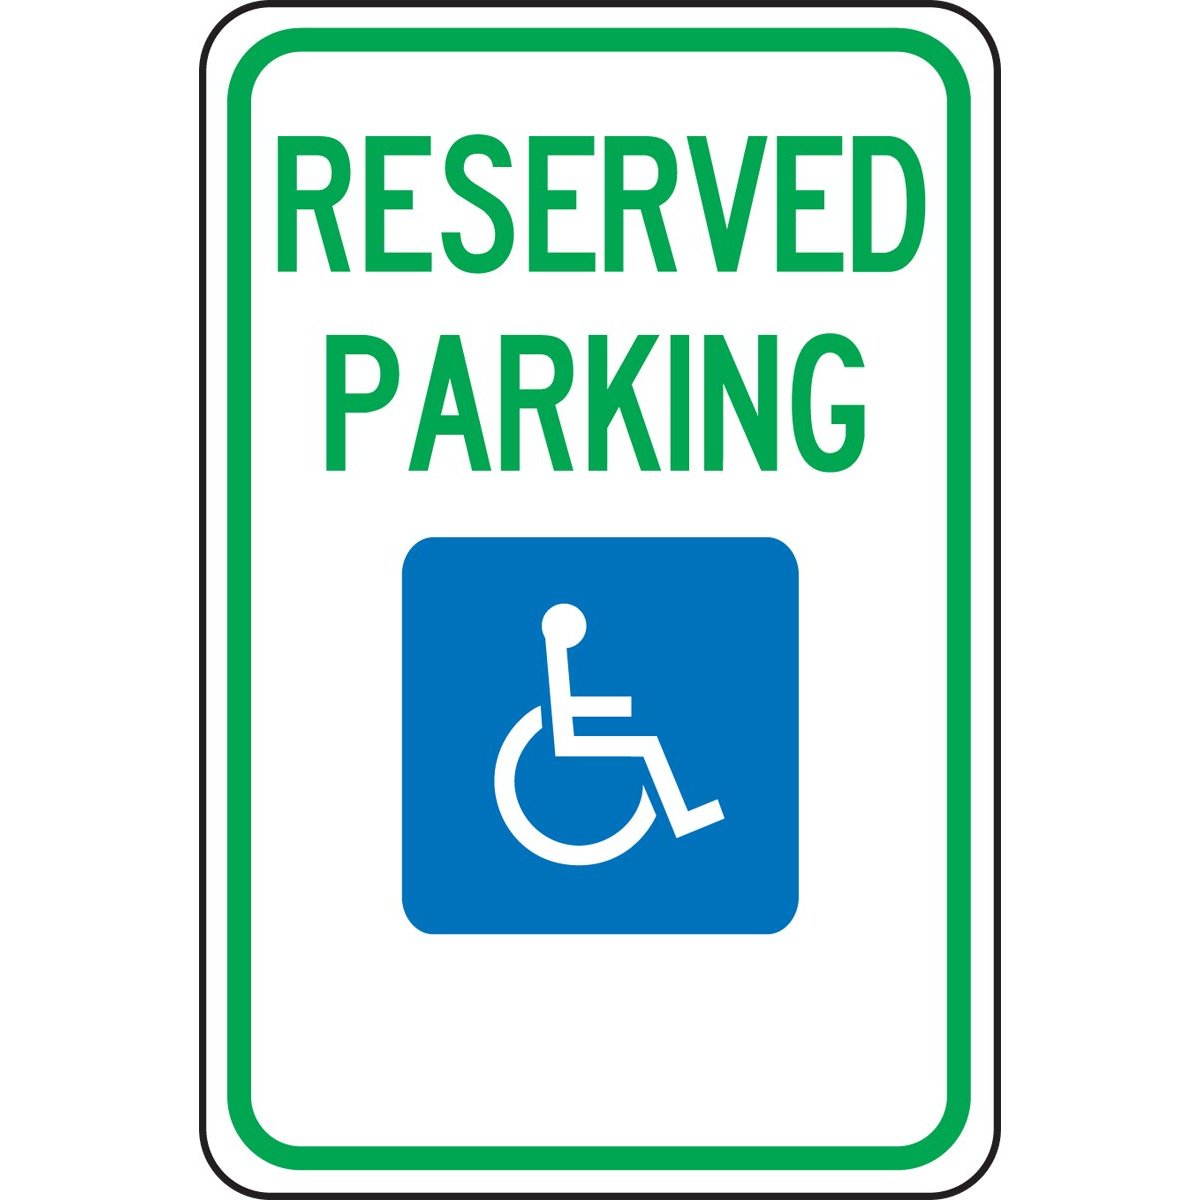 Handicapped Parking Symbol   Clipart Best